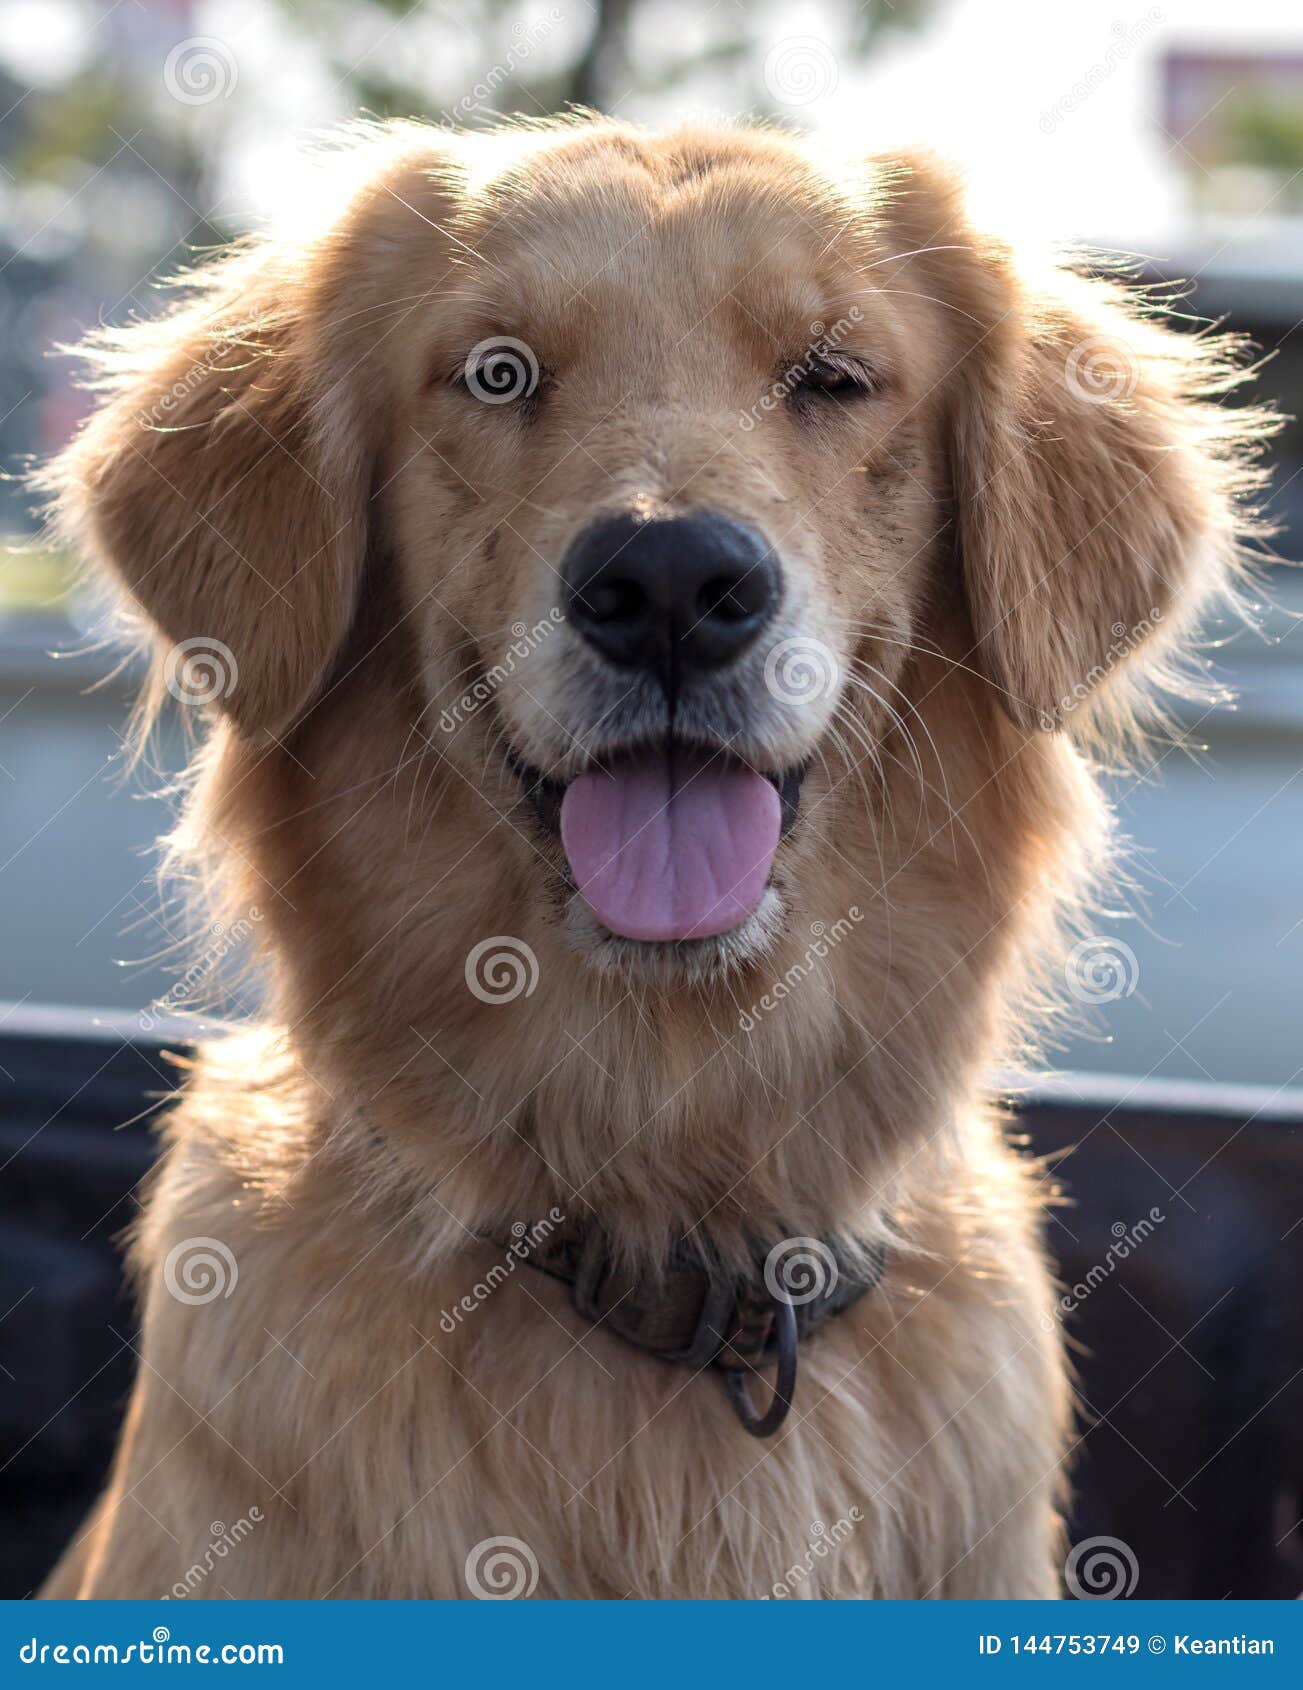 Golden Retriever Dog Face Tongue Stock Image - Image of closeup, passenger:  144753749